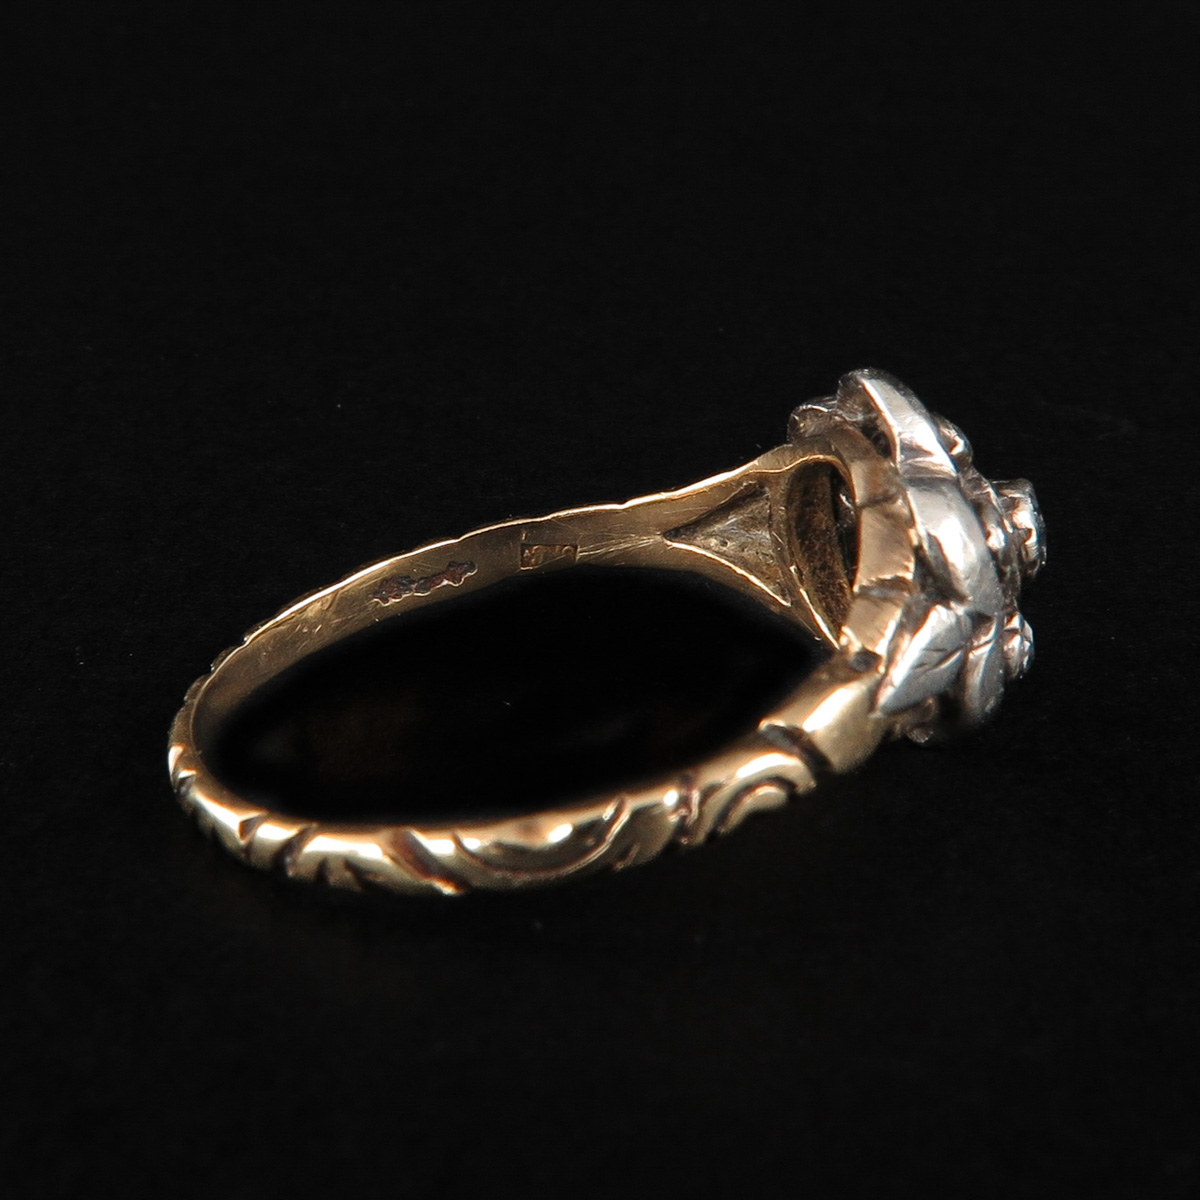 A Ladies Diamond Ring - Image 4 of 4